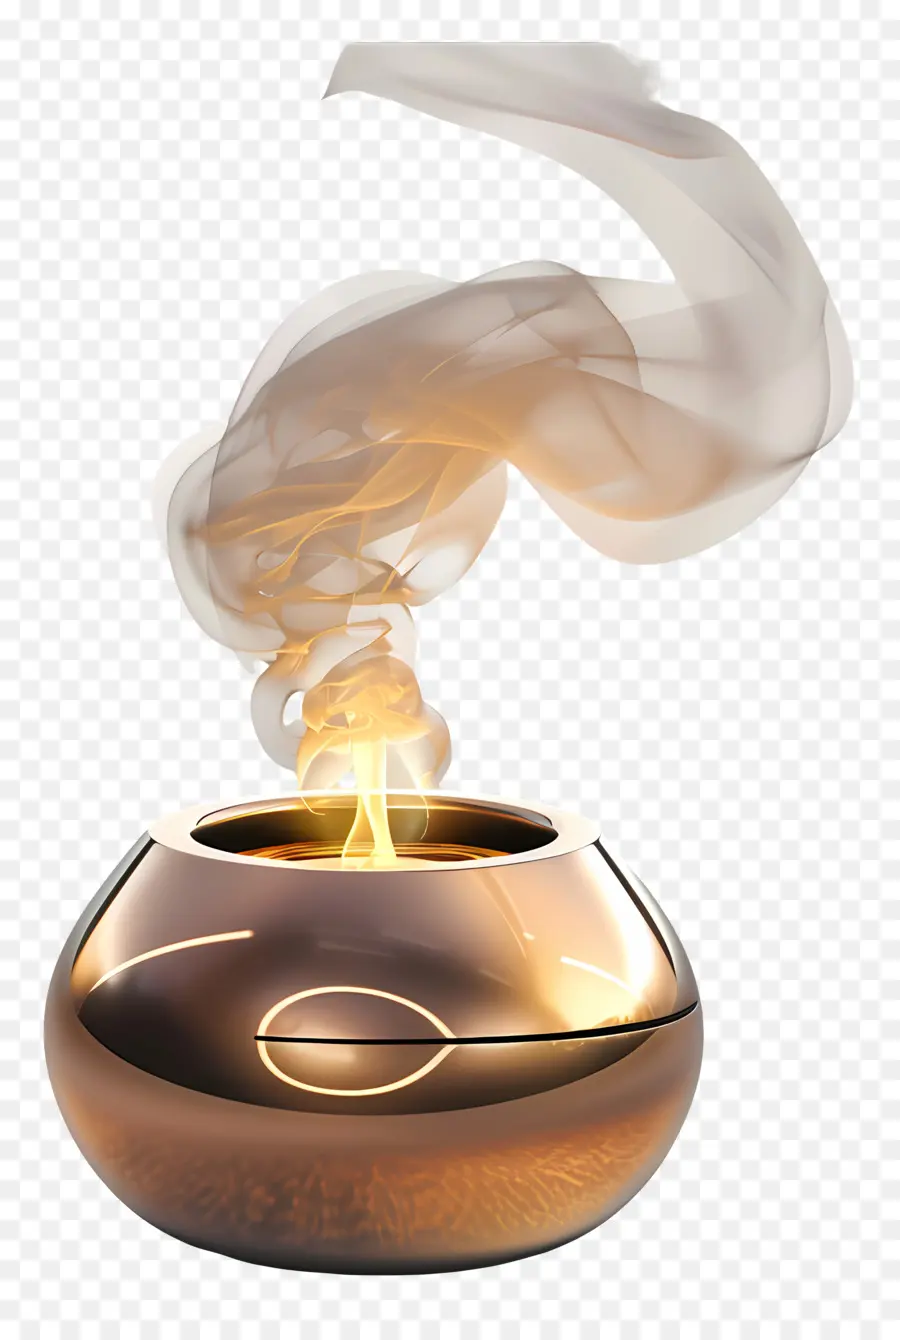 aroma burner copper pot cooking utensil smoke kitchenware